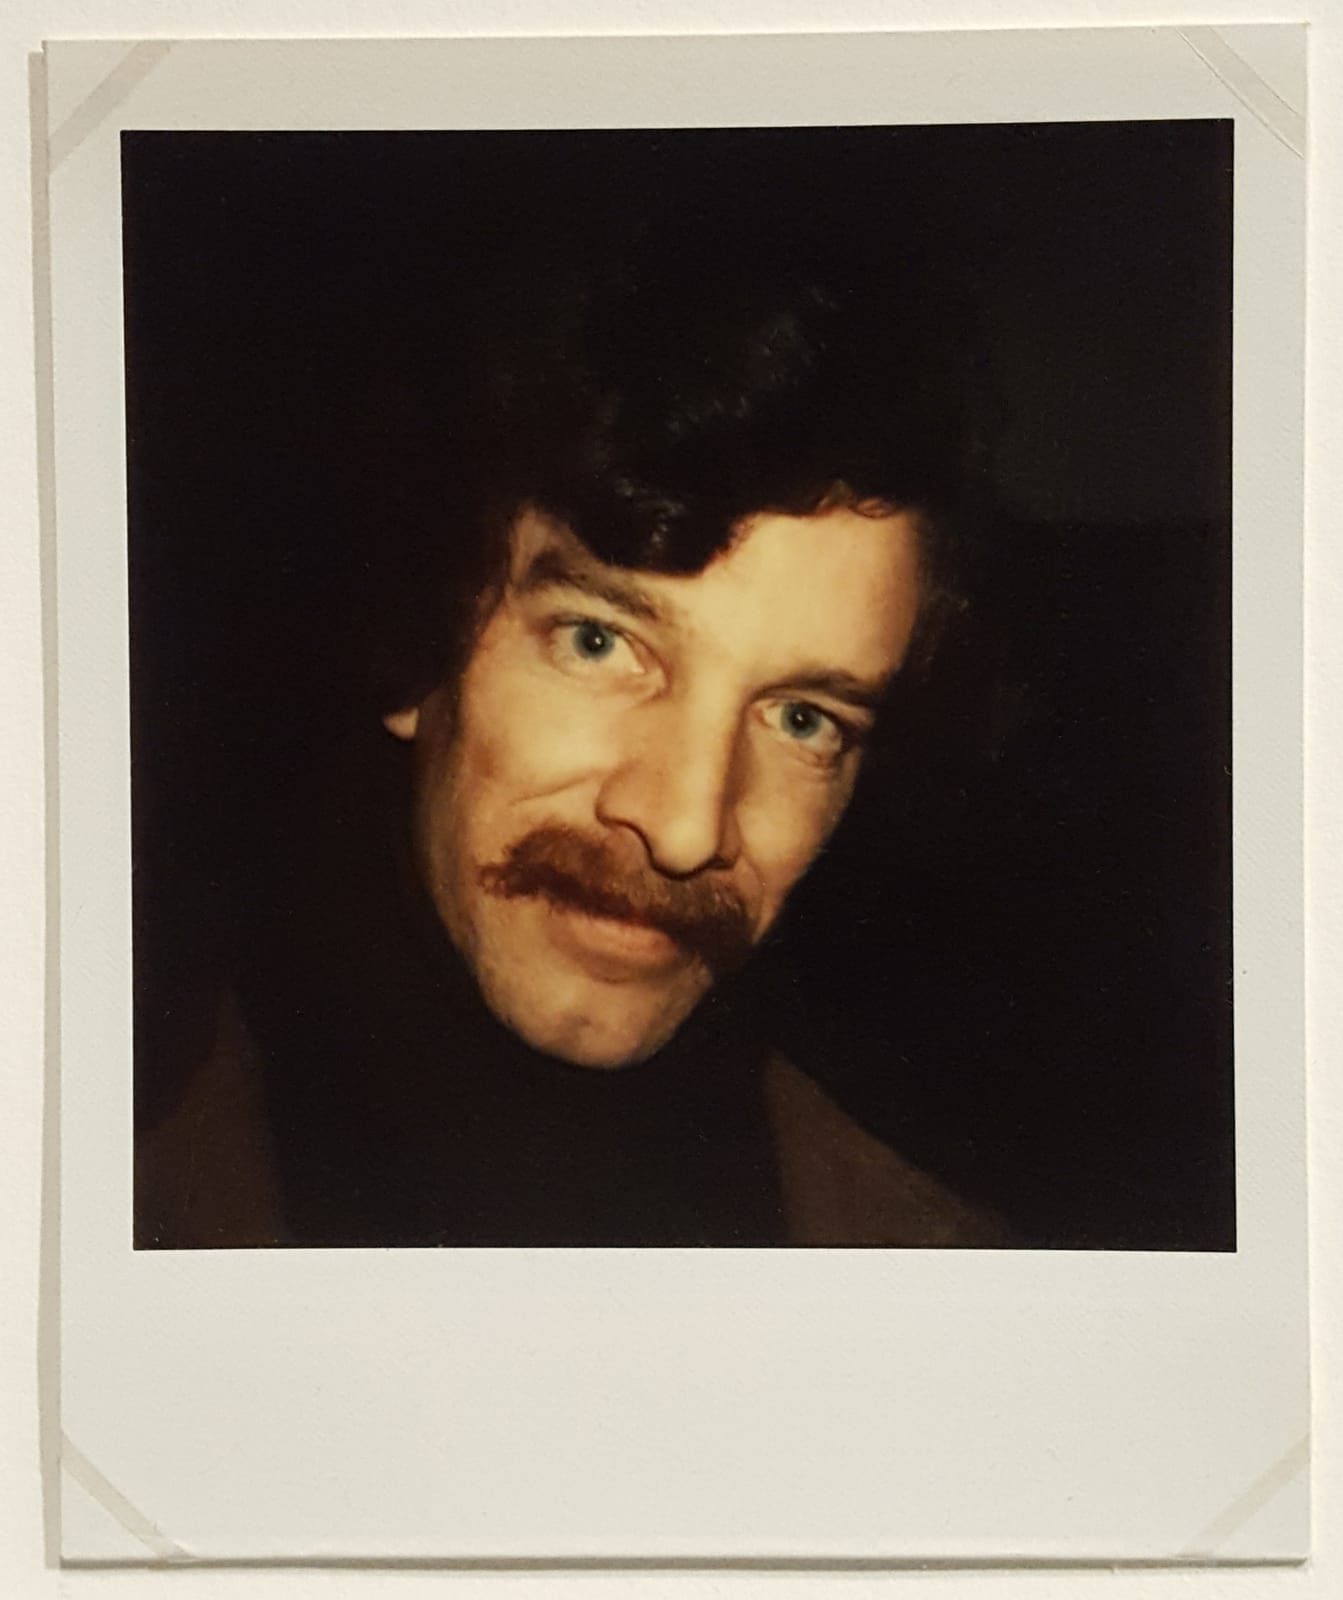 Walker Evans, Untitled portrait, c. 1974